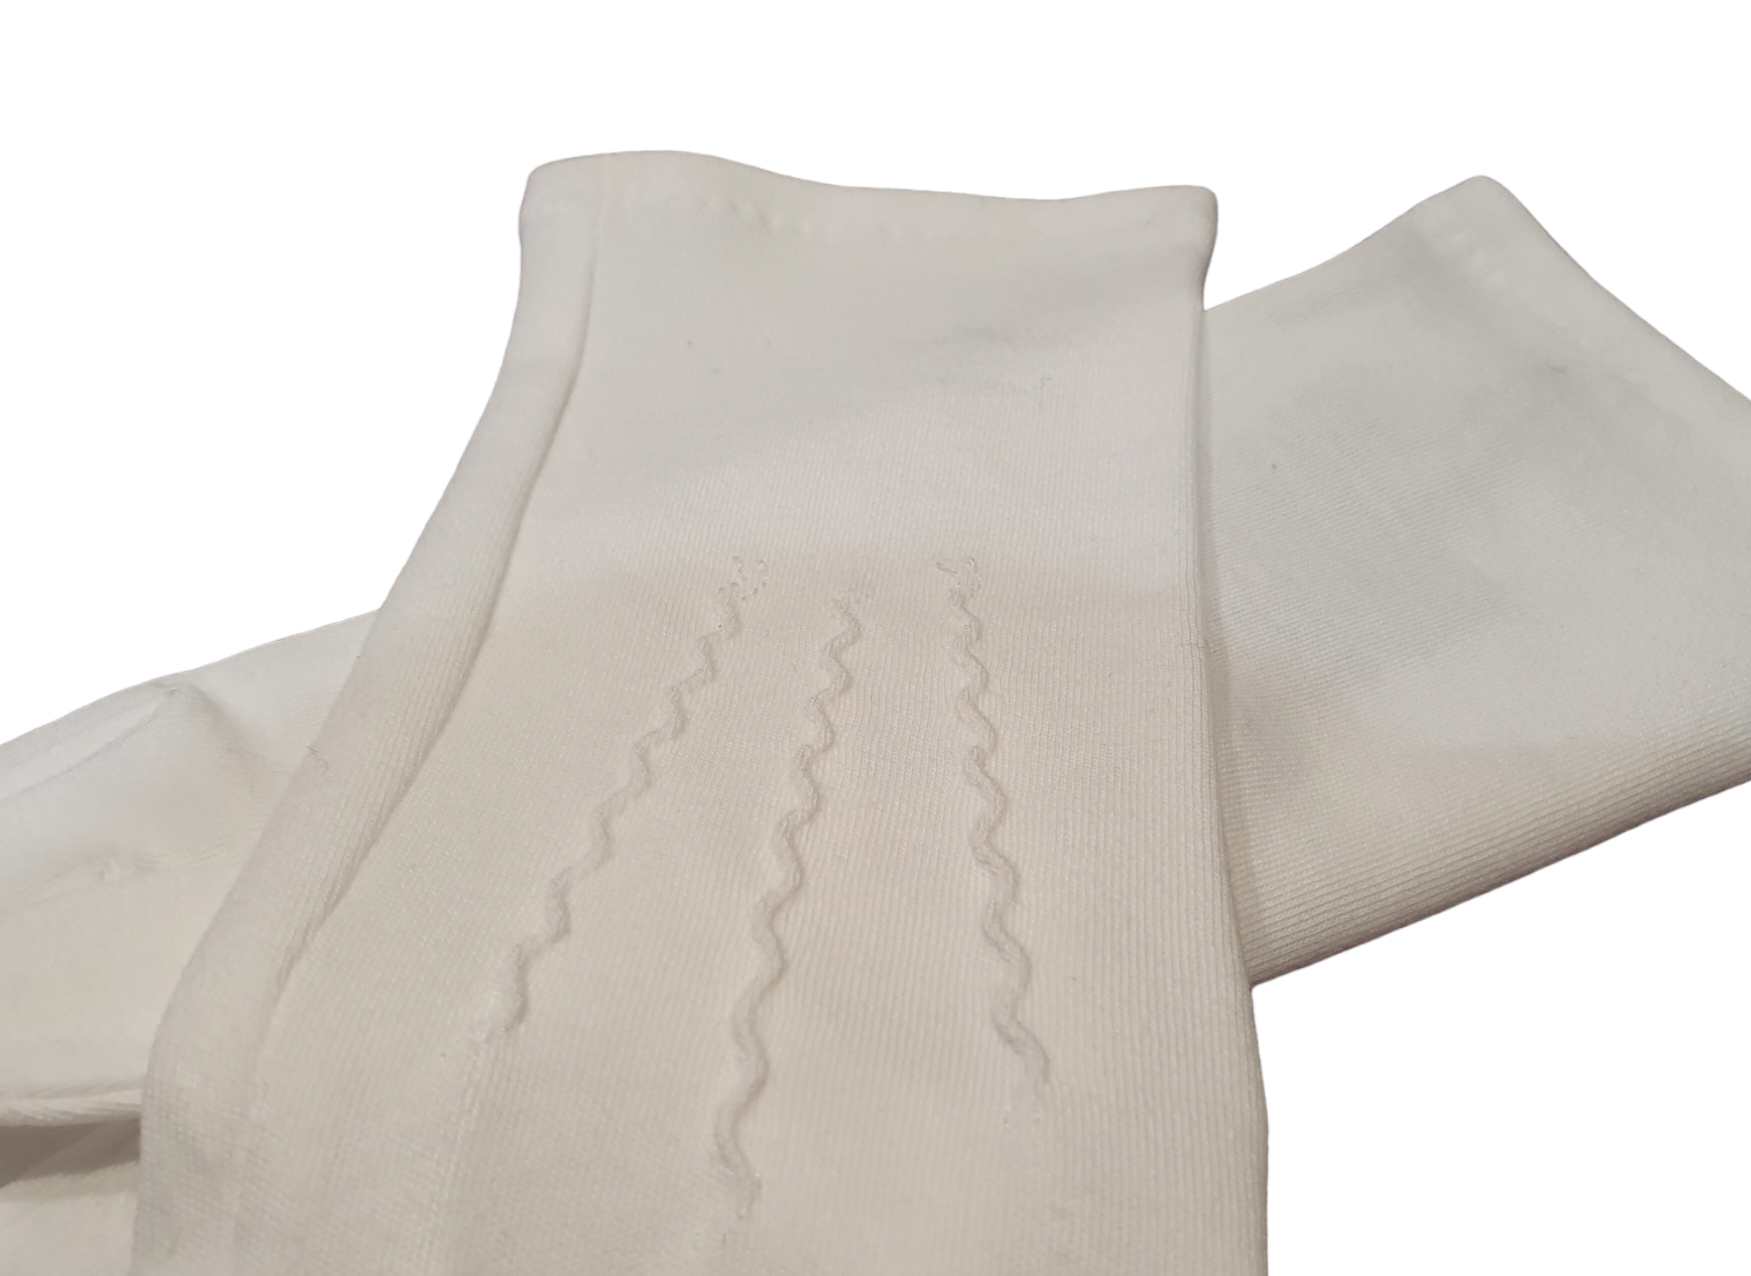 Diane 40s 50s Inspired Ivory Cotton Gloves